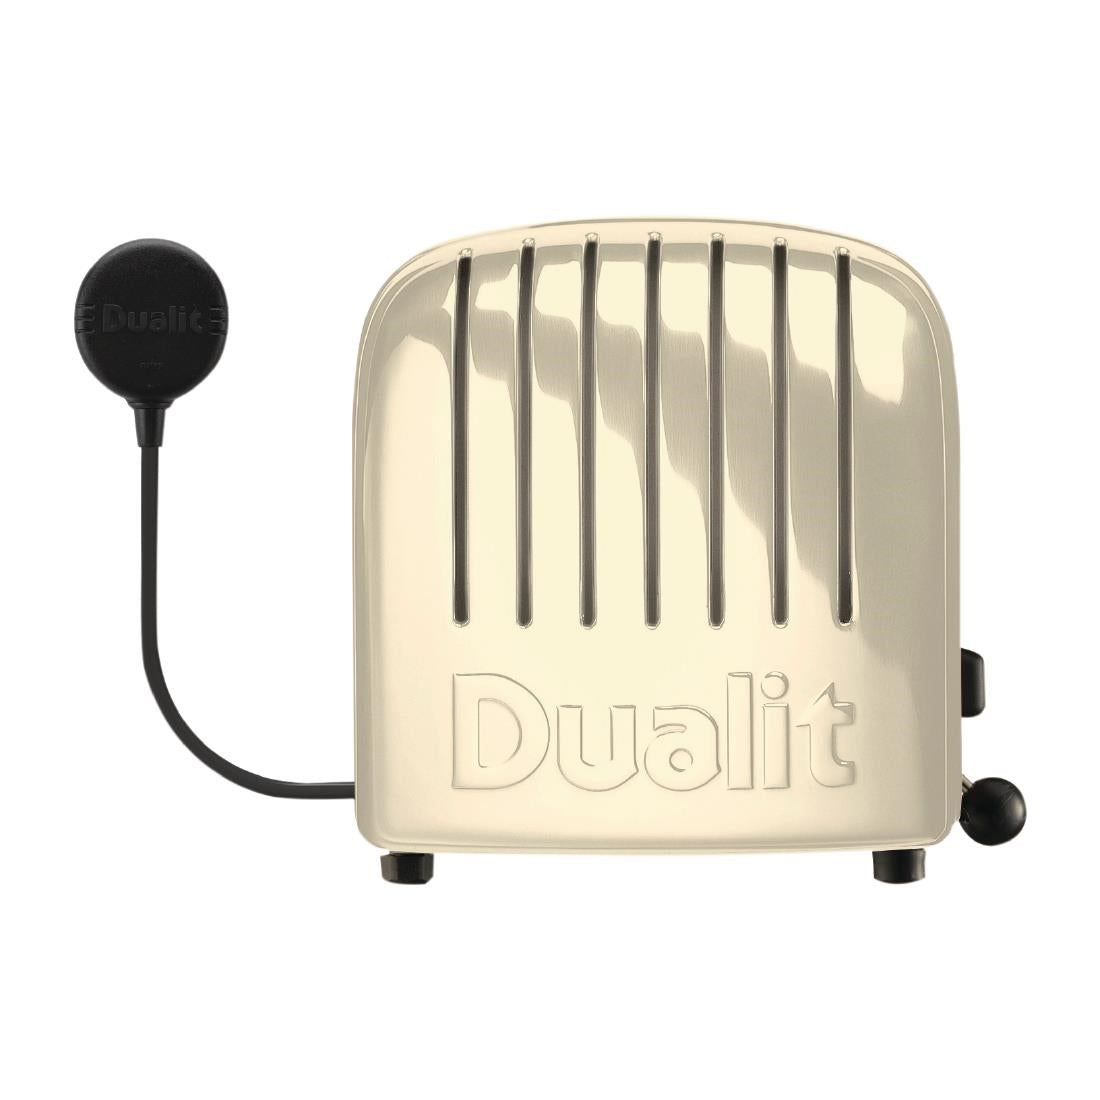 Dualit 4 Slice Vario Toaster Utility Cream 40354 JD Catering Equipment Solutions Ltd